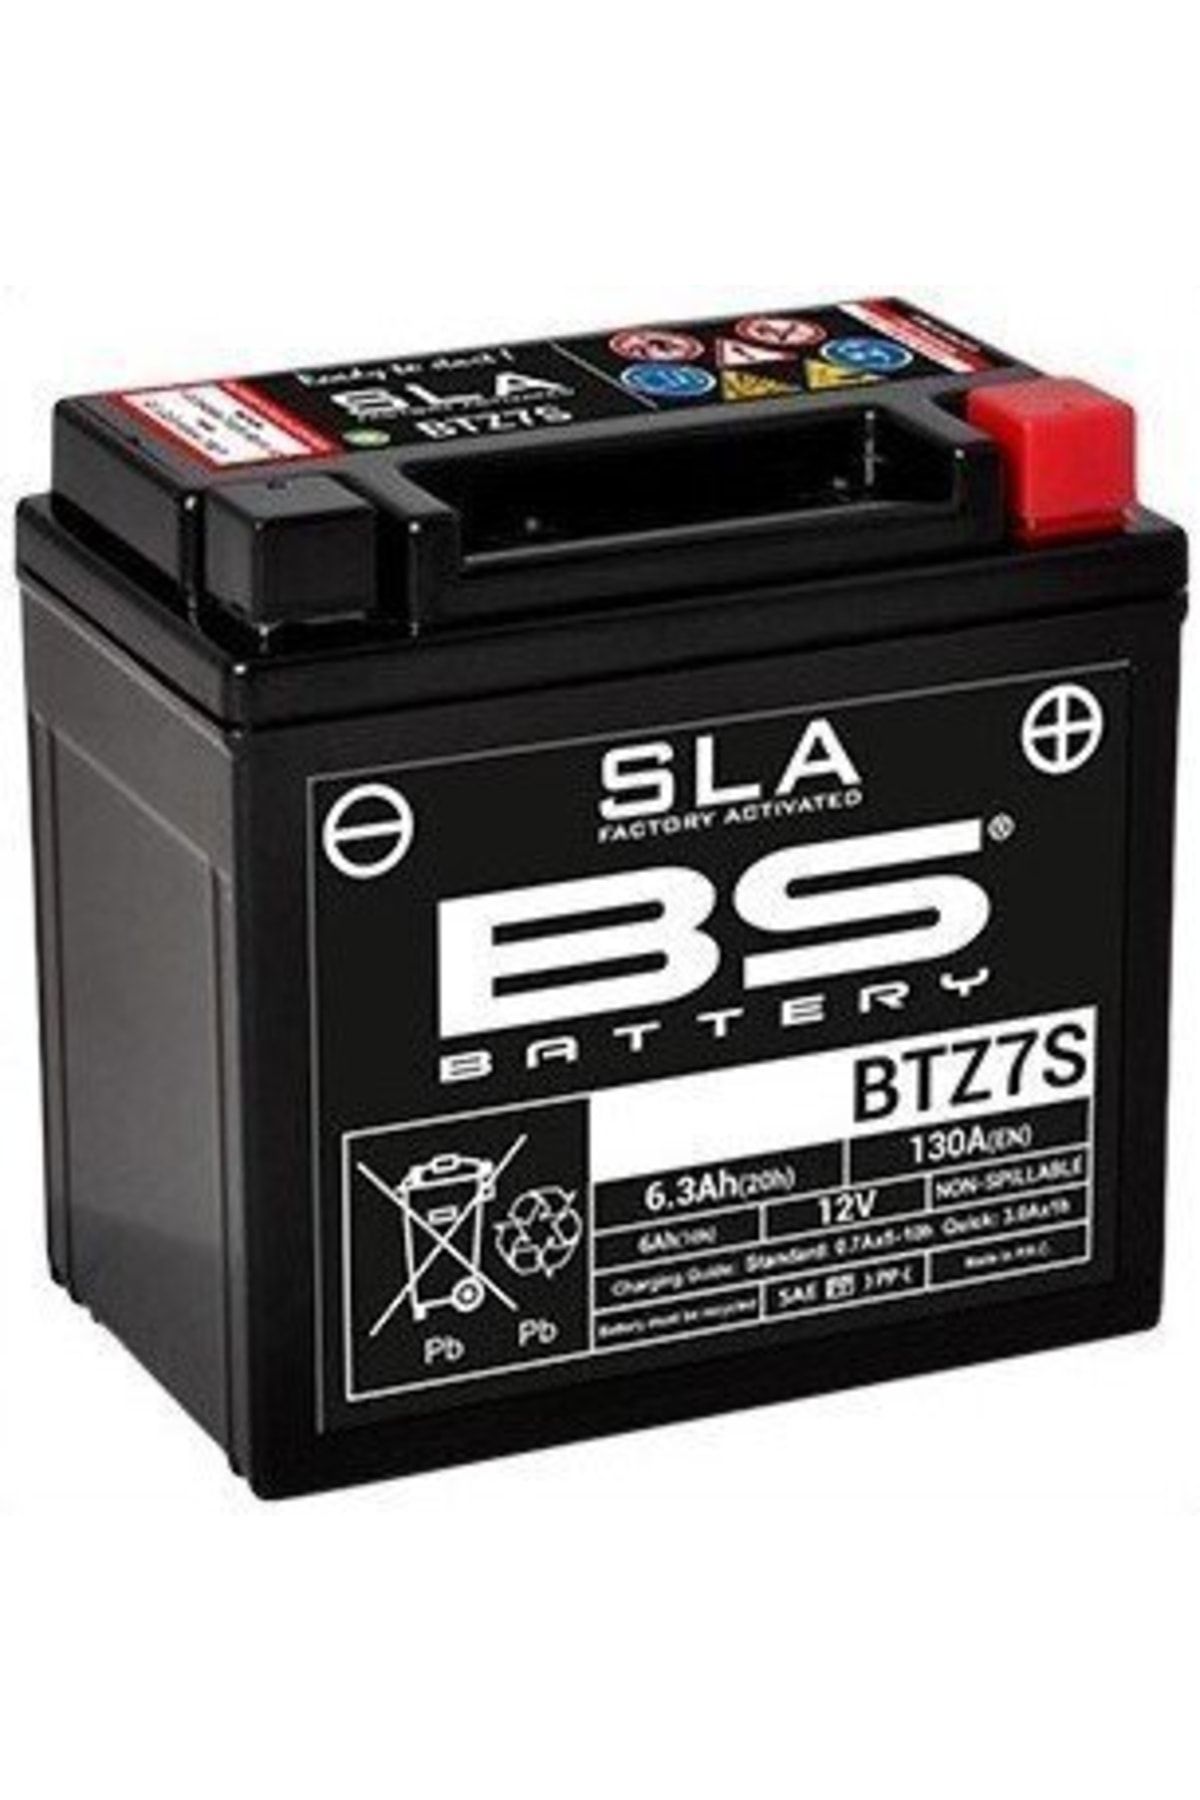 Аккумулятор bs battery. Btz7s аккумулятор. Kage аккумулятор ytz7s. Ytz14s. BS Battery аккумулятор.